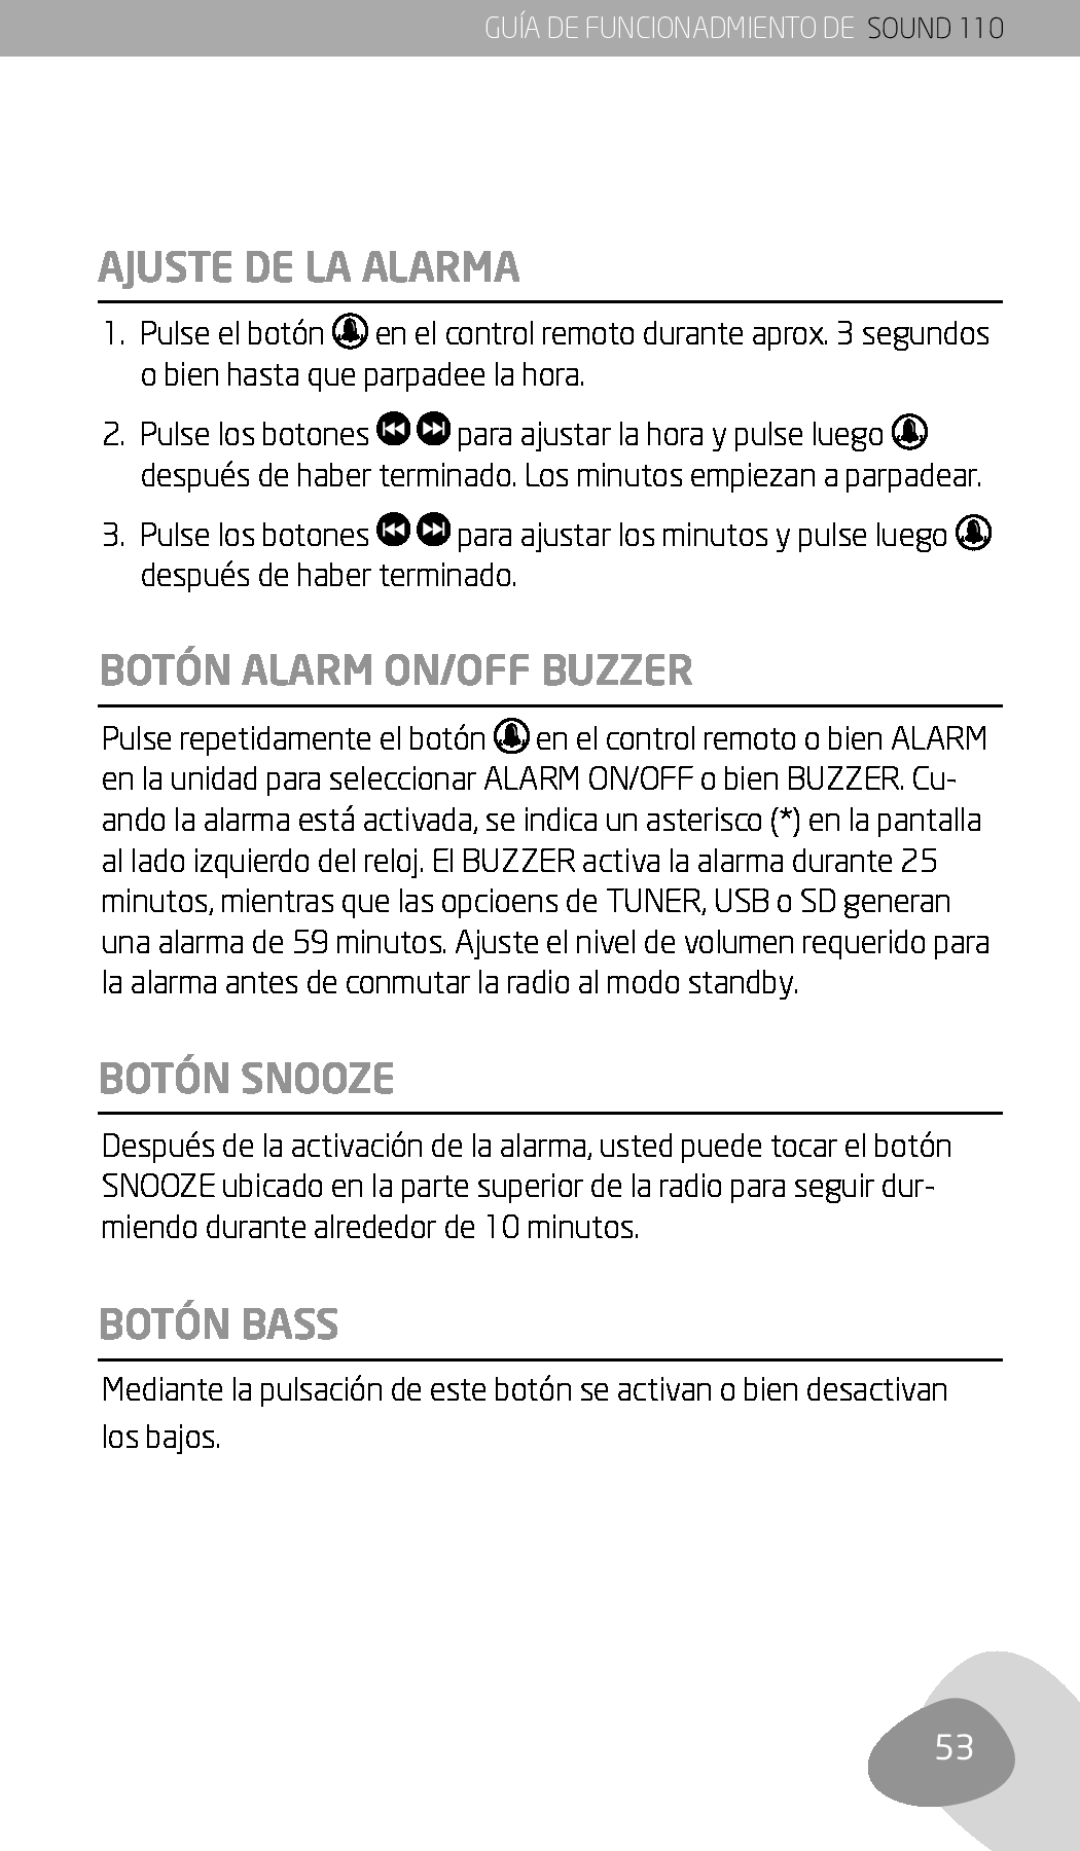 Eton 110 owner manual Ajuste De La Alarma, Botón Alarm On/Off Buzzer, Botón Snooze, Botón Bass 